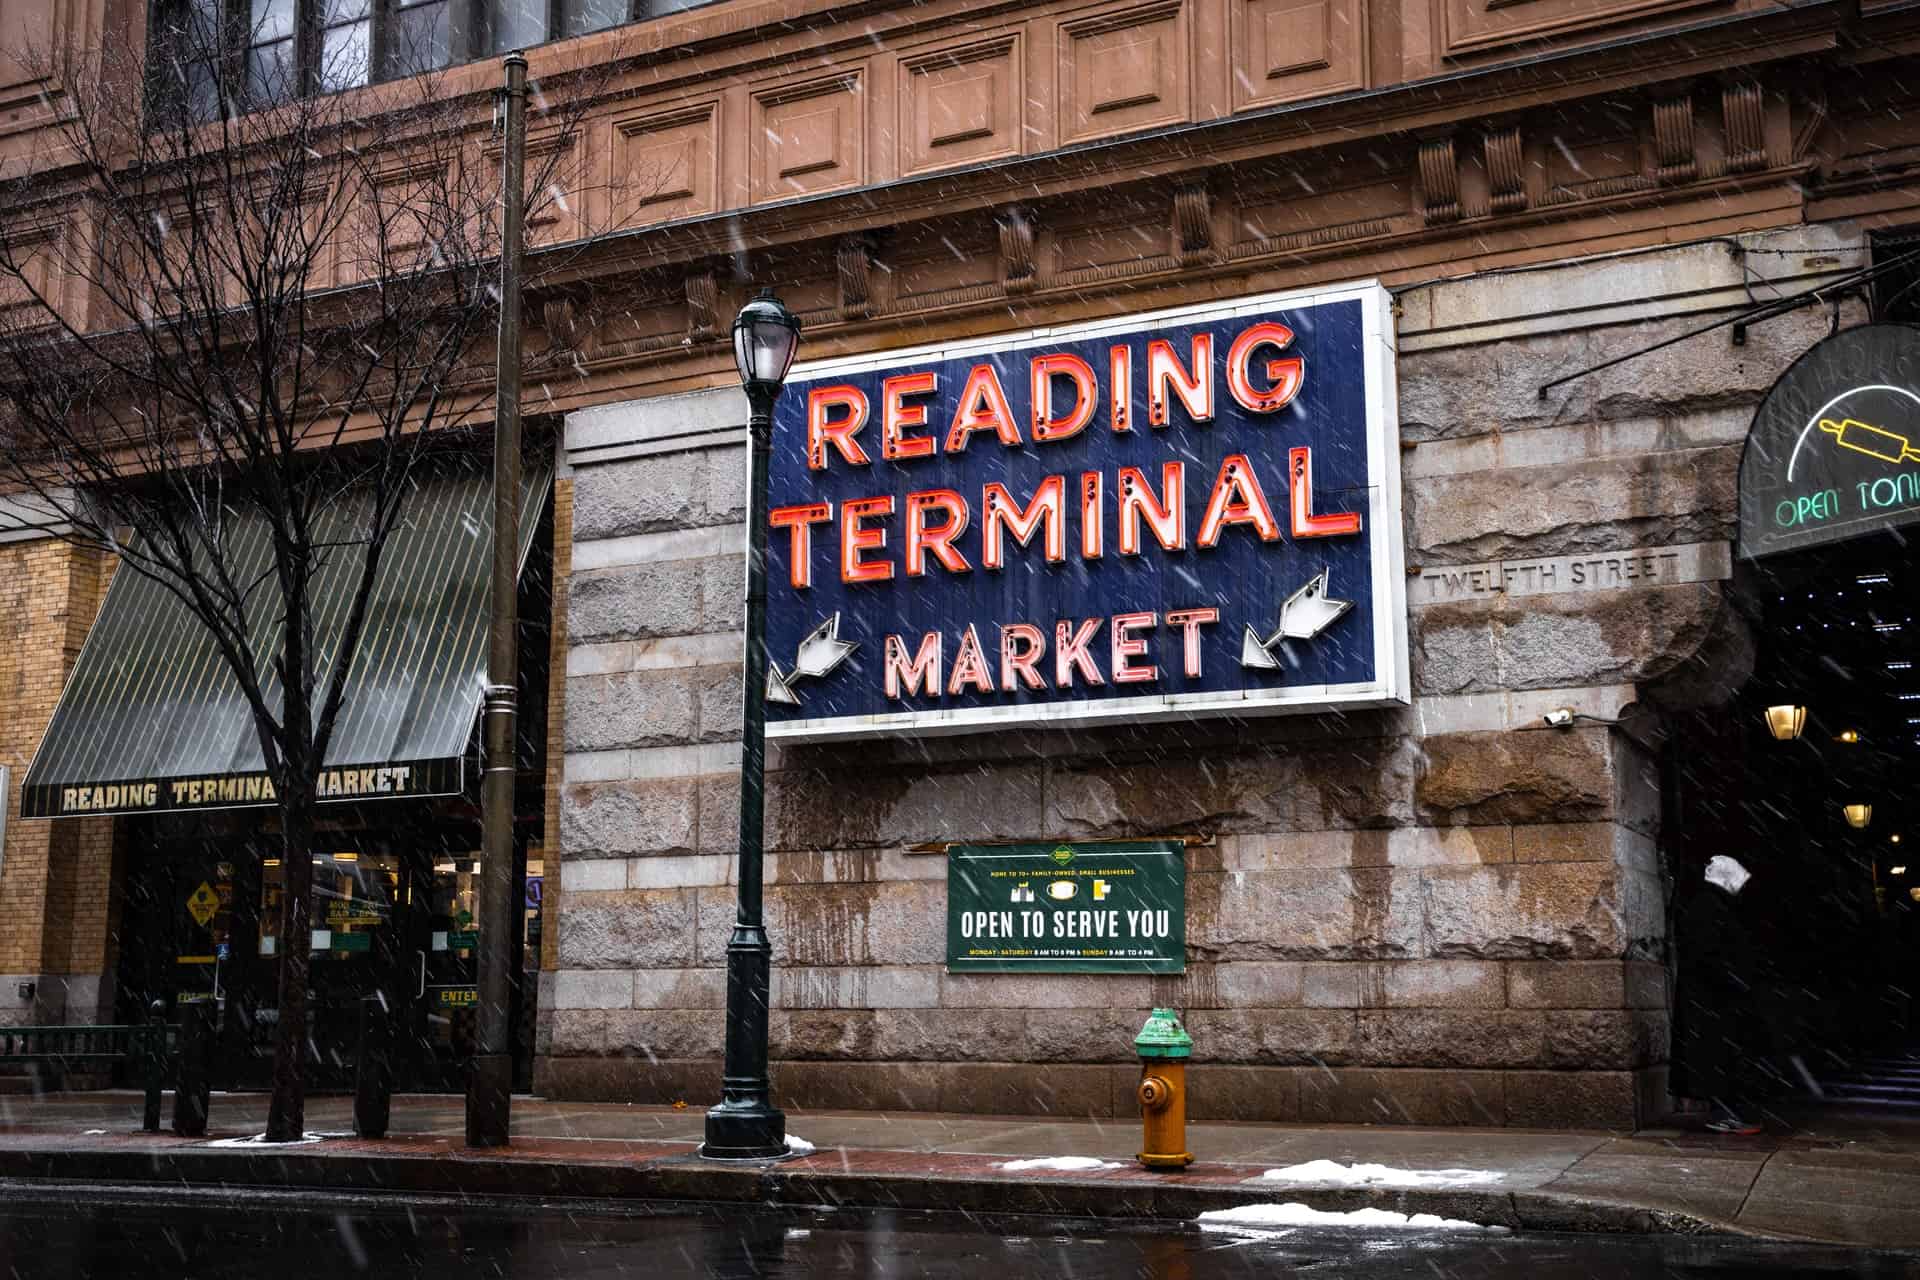 Best things to do in Philadelphia Pennsylvania - Bob DiMenna - Reading Terminal Market by Dan Mall on Unsplash